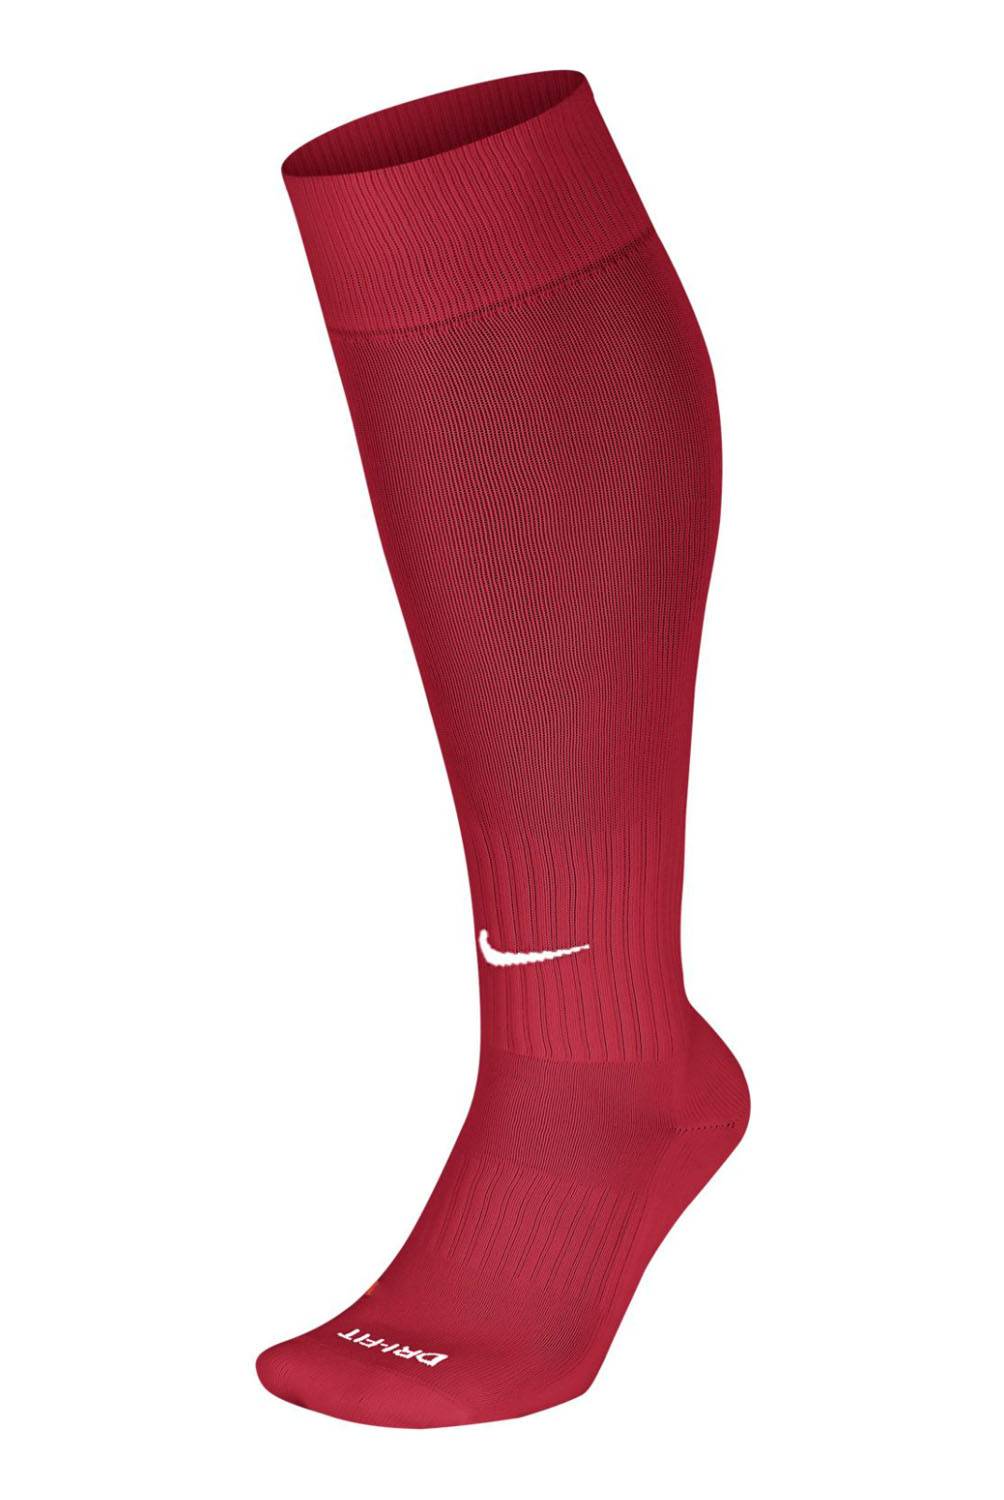 NIKE - Calcetines De Fútbol Unisex Nike